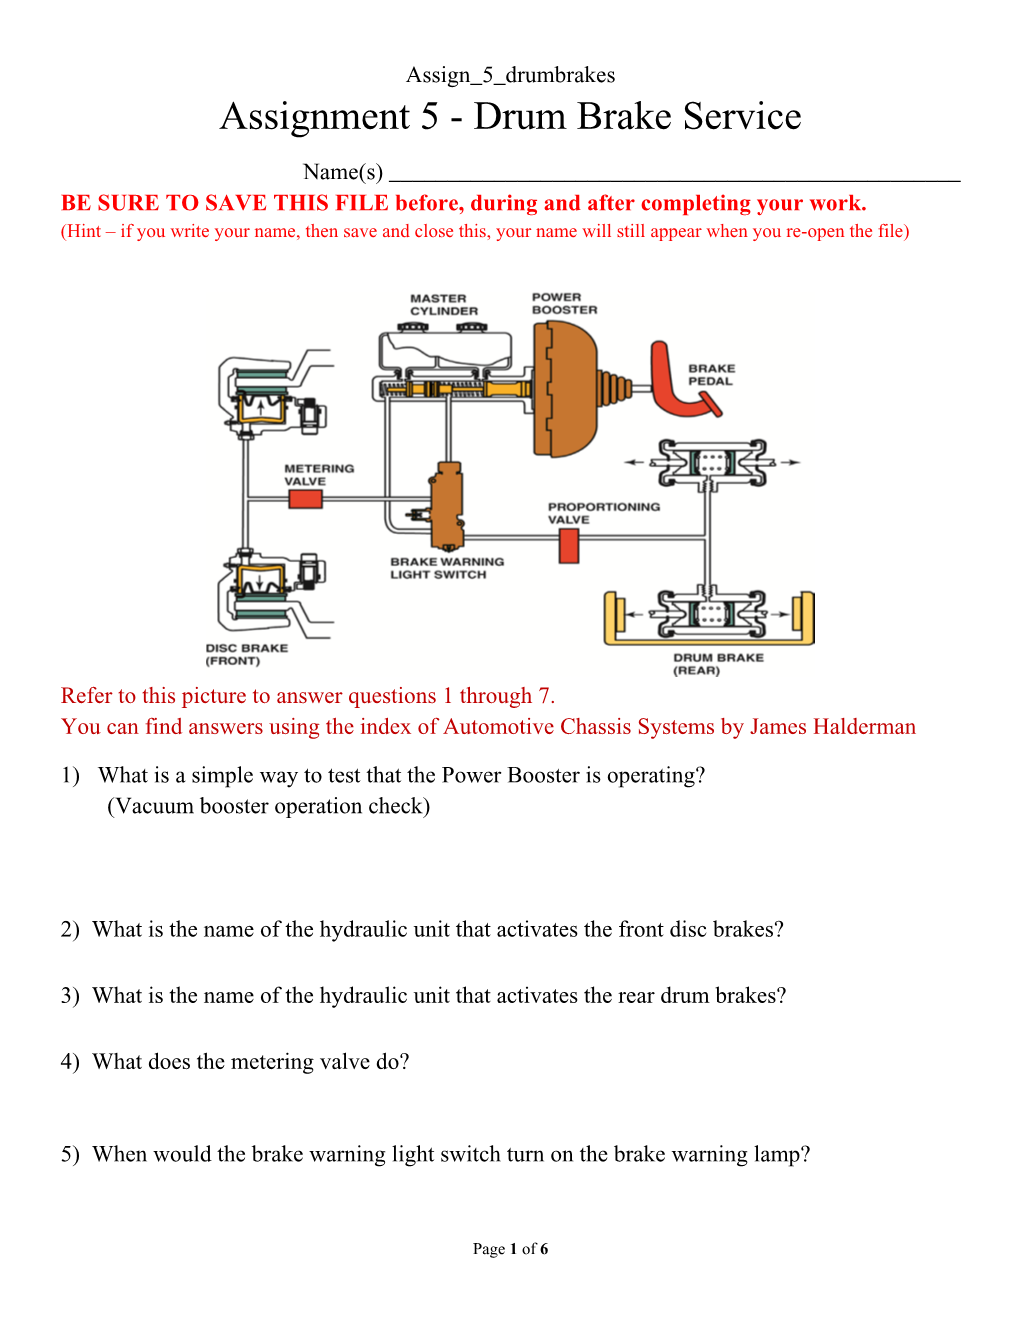 Assignment 5 - Drum Brake Service